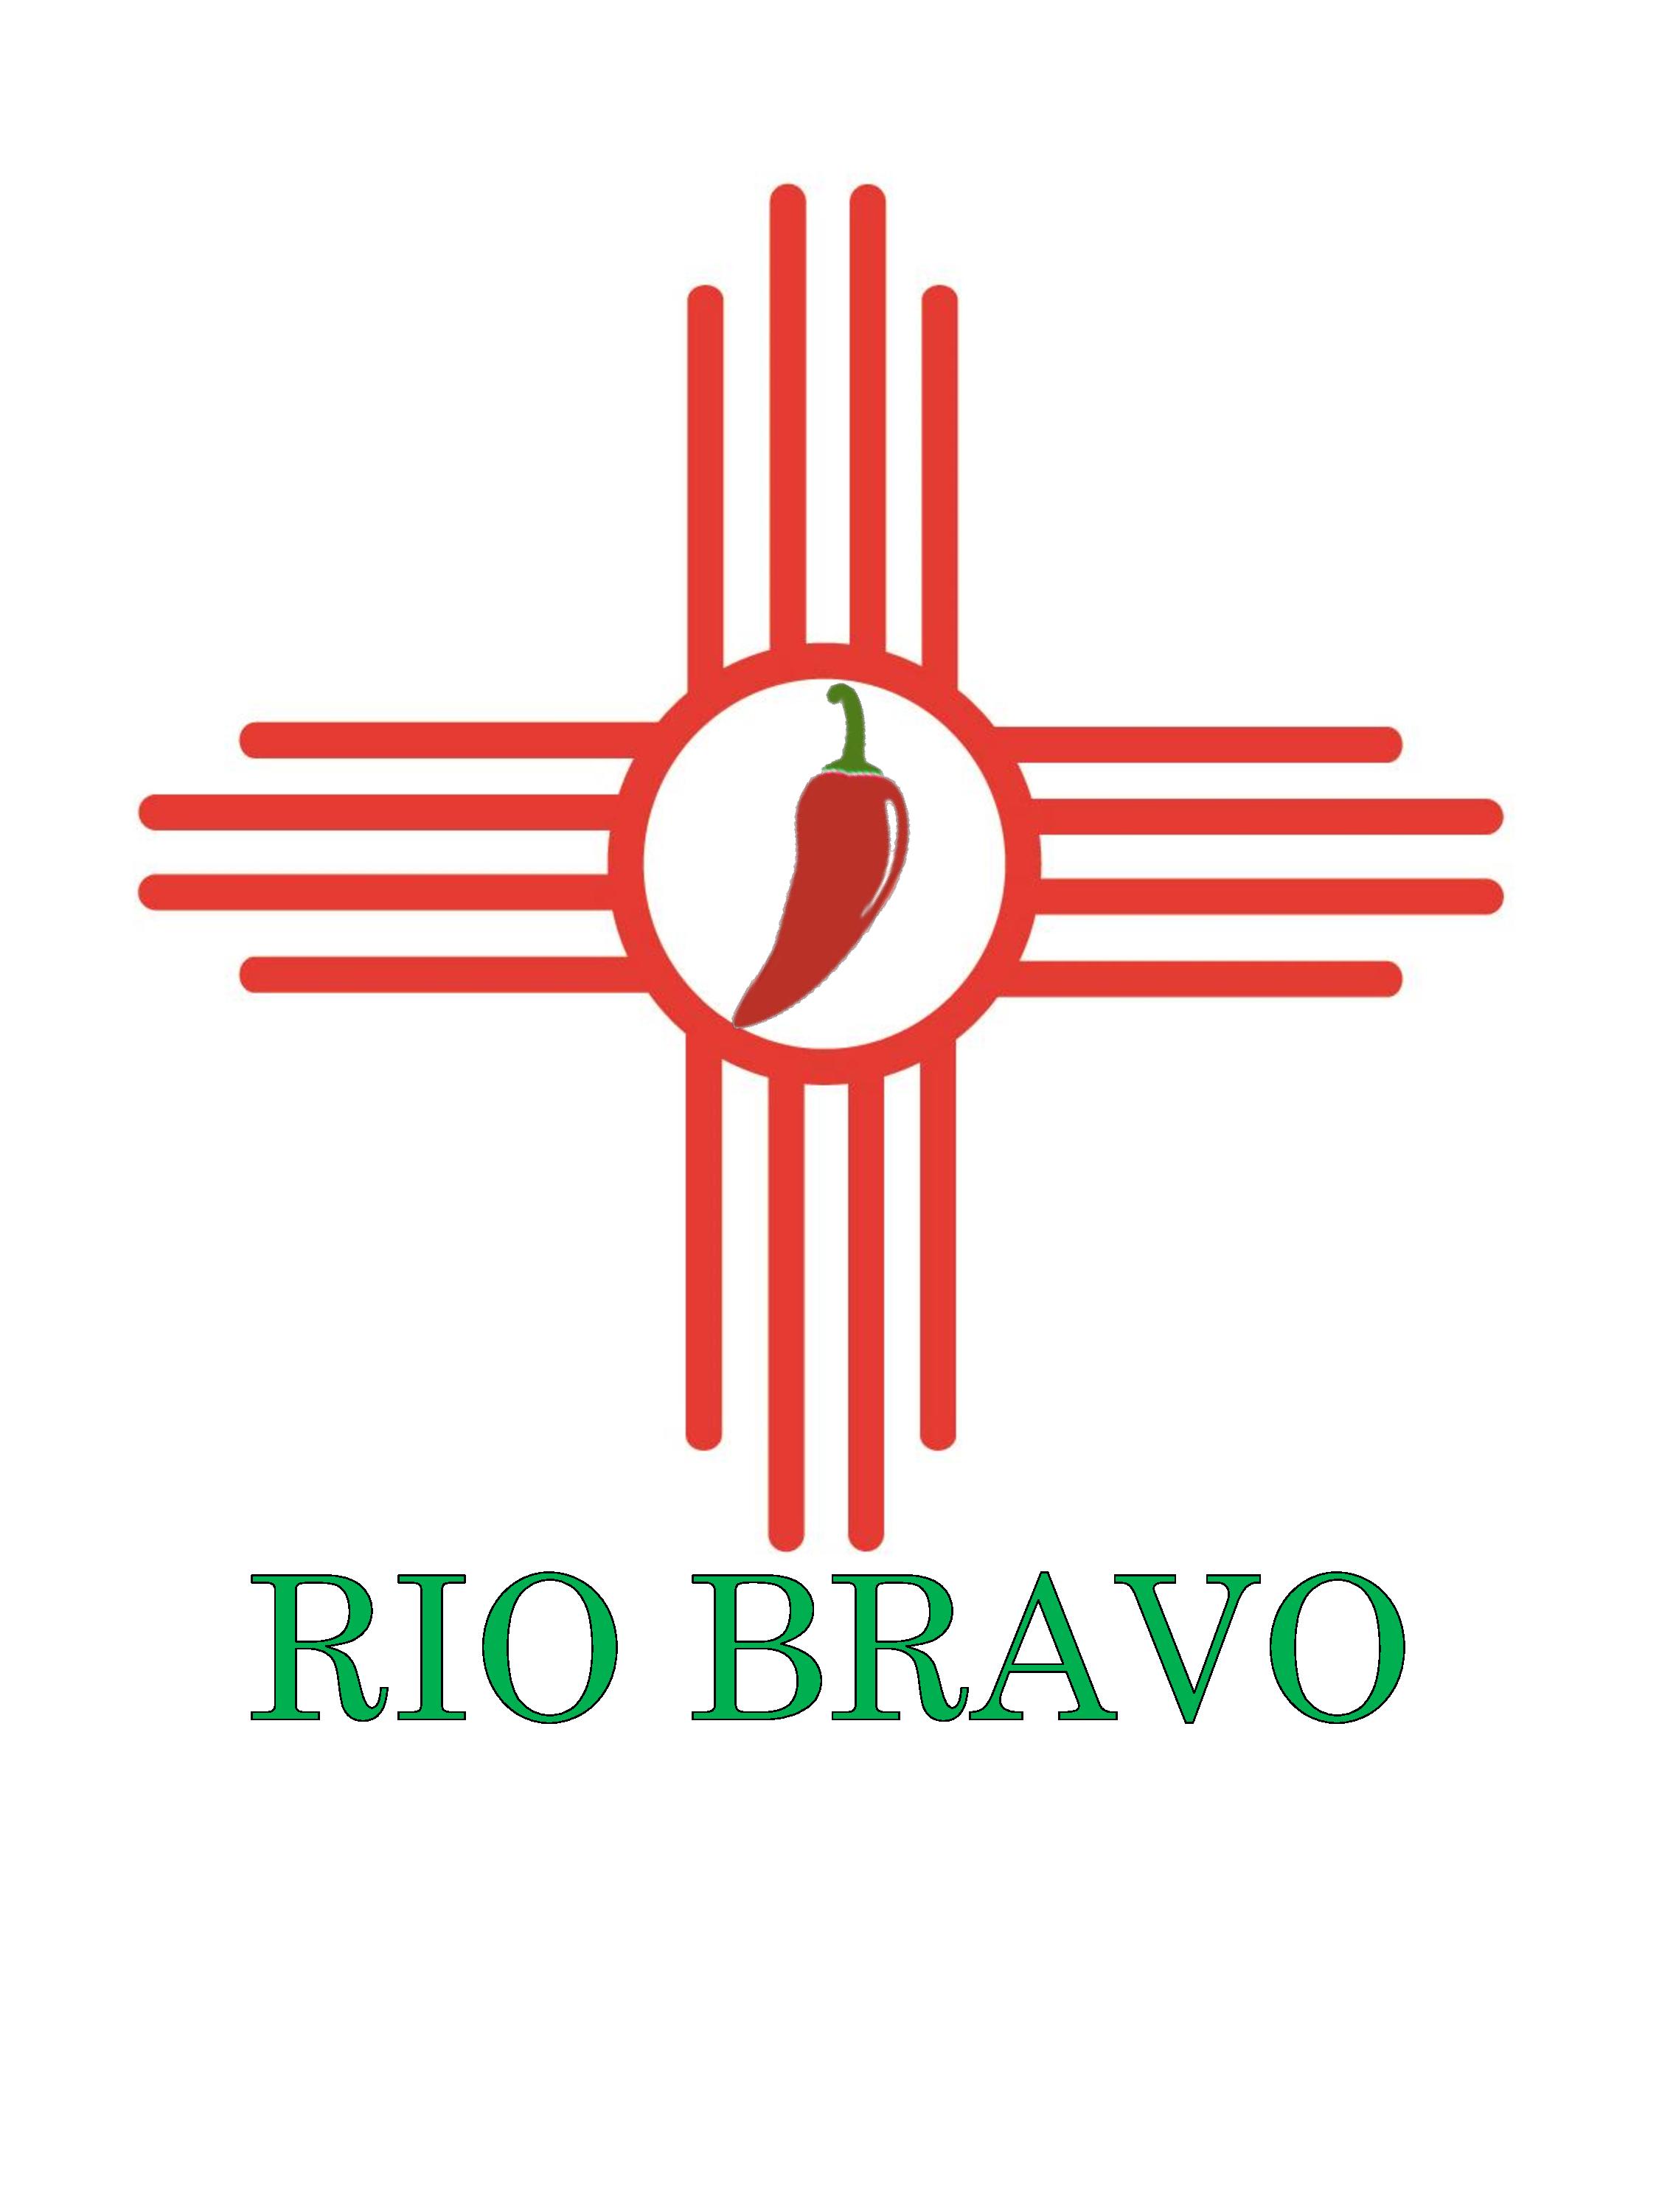 Lira's Rio Bravo LLC